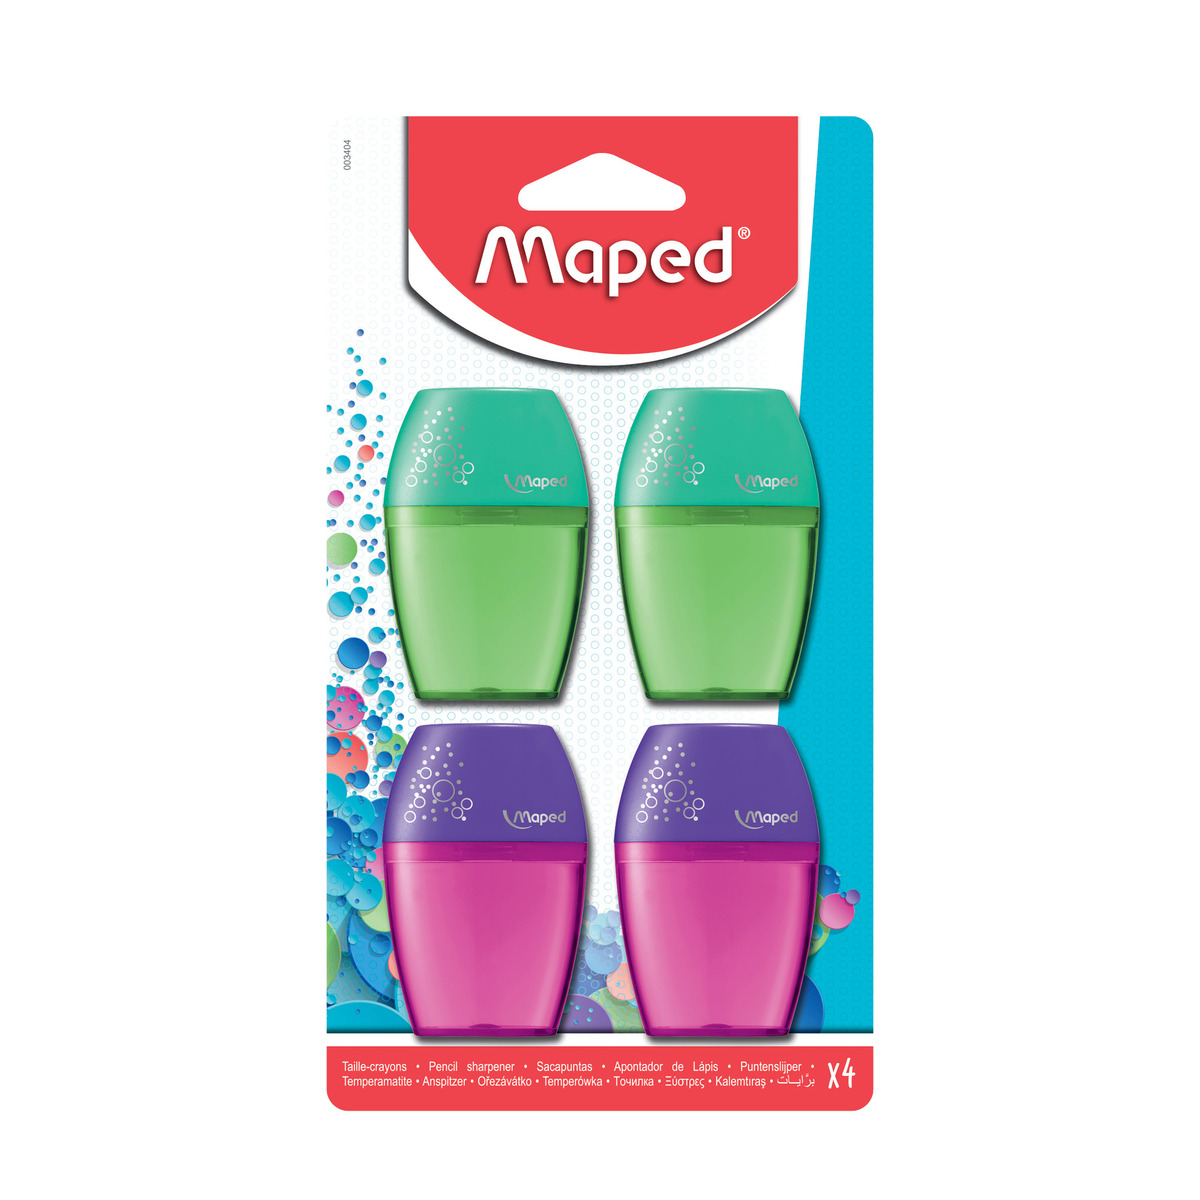 Maped Sharpener MD003404, 4 pcs Pack Assorted